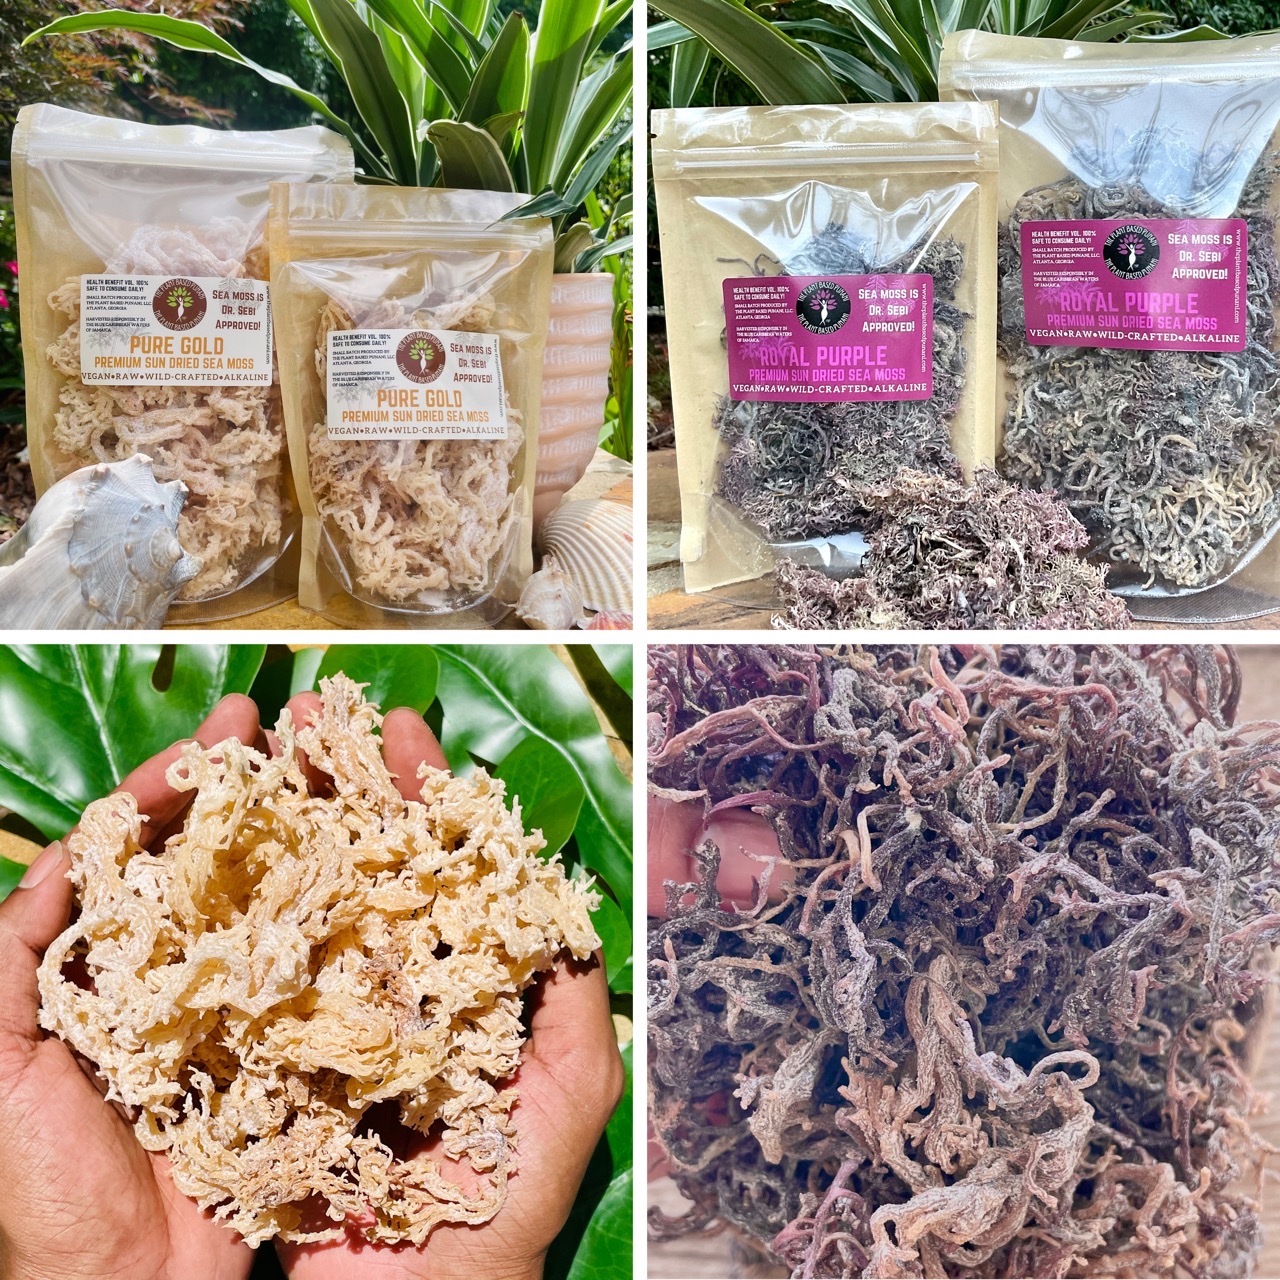 SUBSCRIBE & SAVE Premium Sun-Dried Sea Moss - The Plant Based Punani